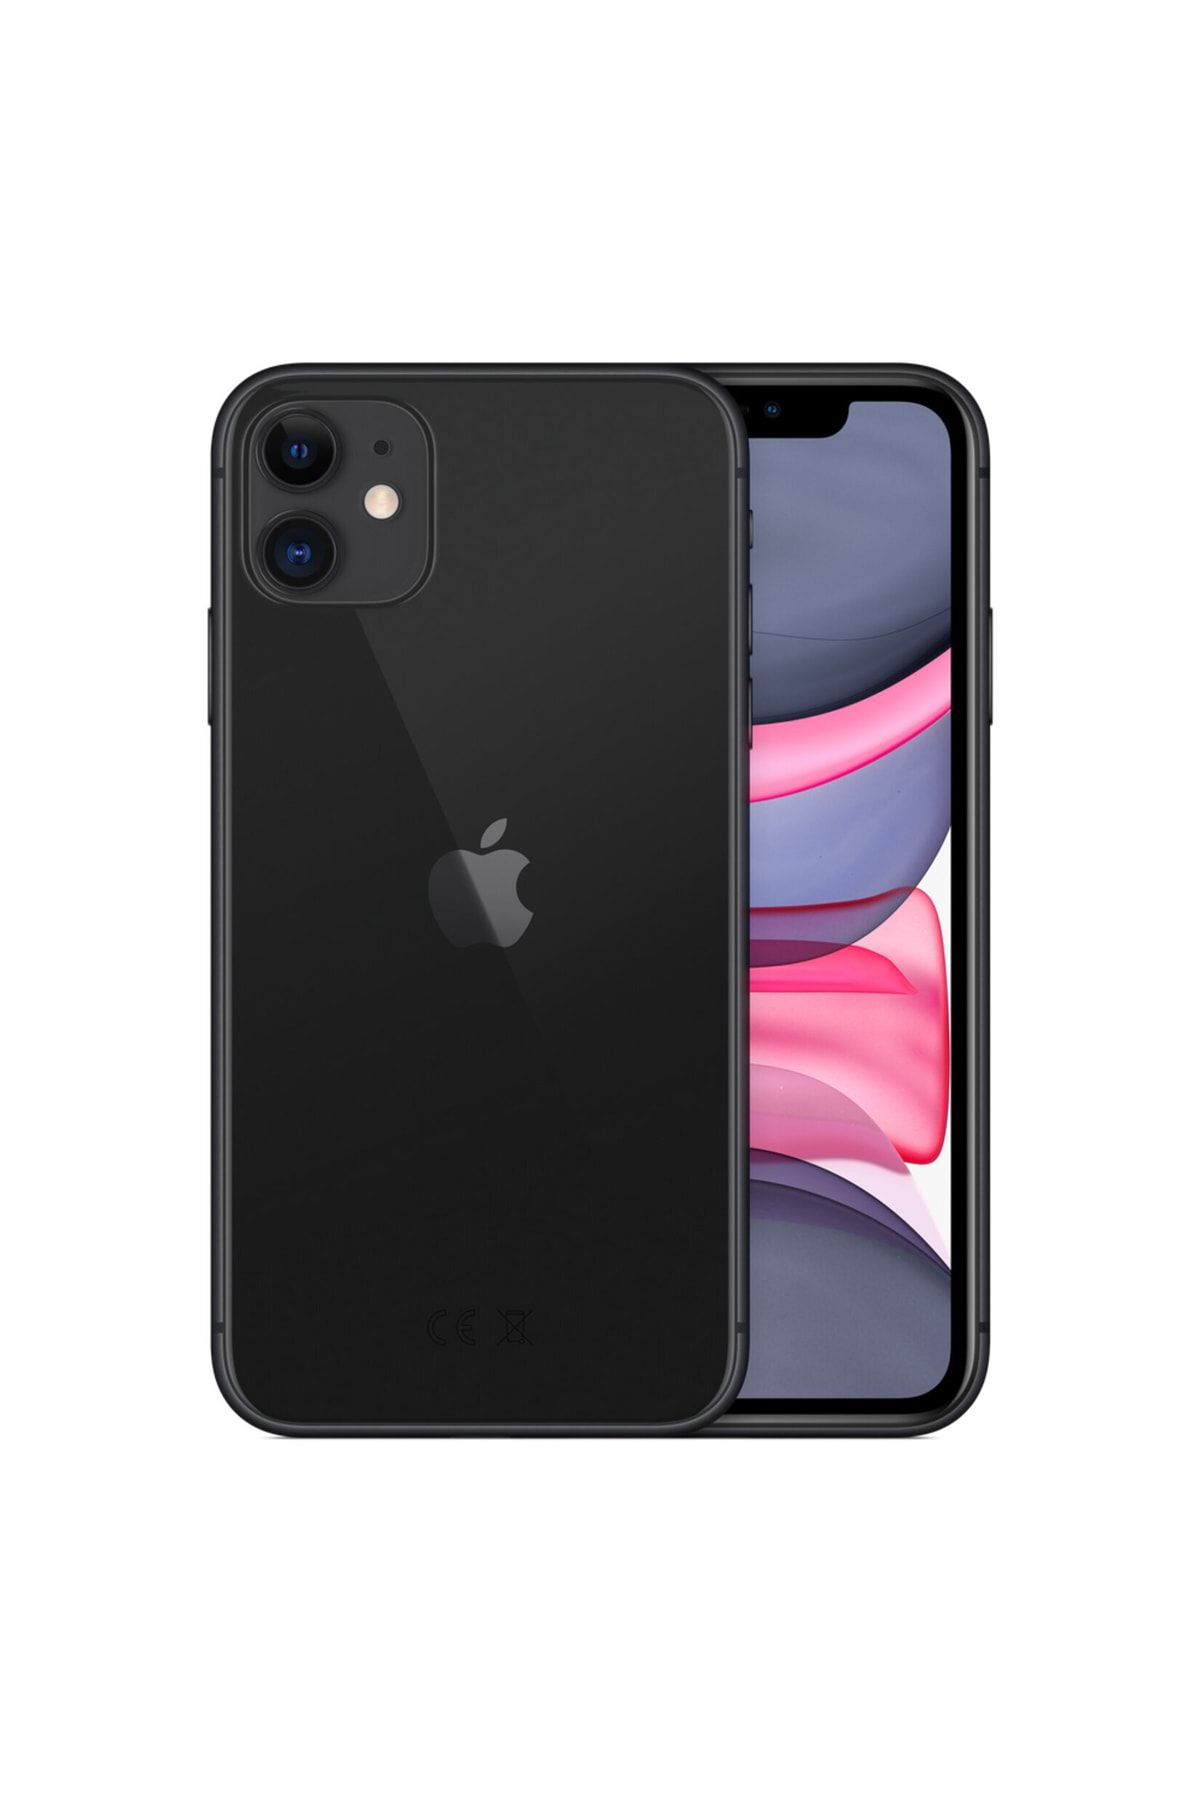 Apple Yenilenmiş iPhone 11 64 GB Siyah Cep Telefonu (12 Ay Garantili) - B Kalite